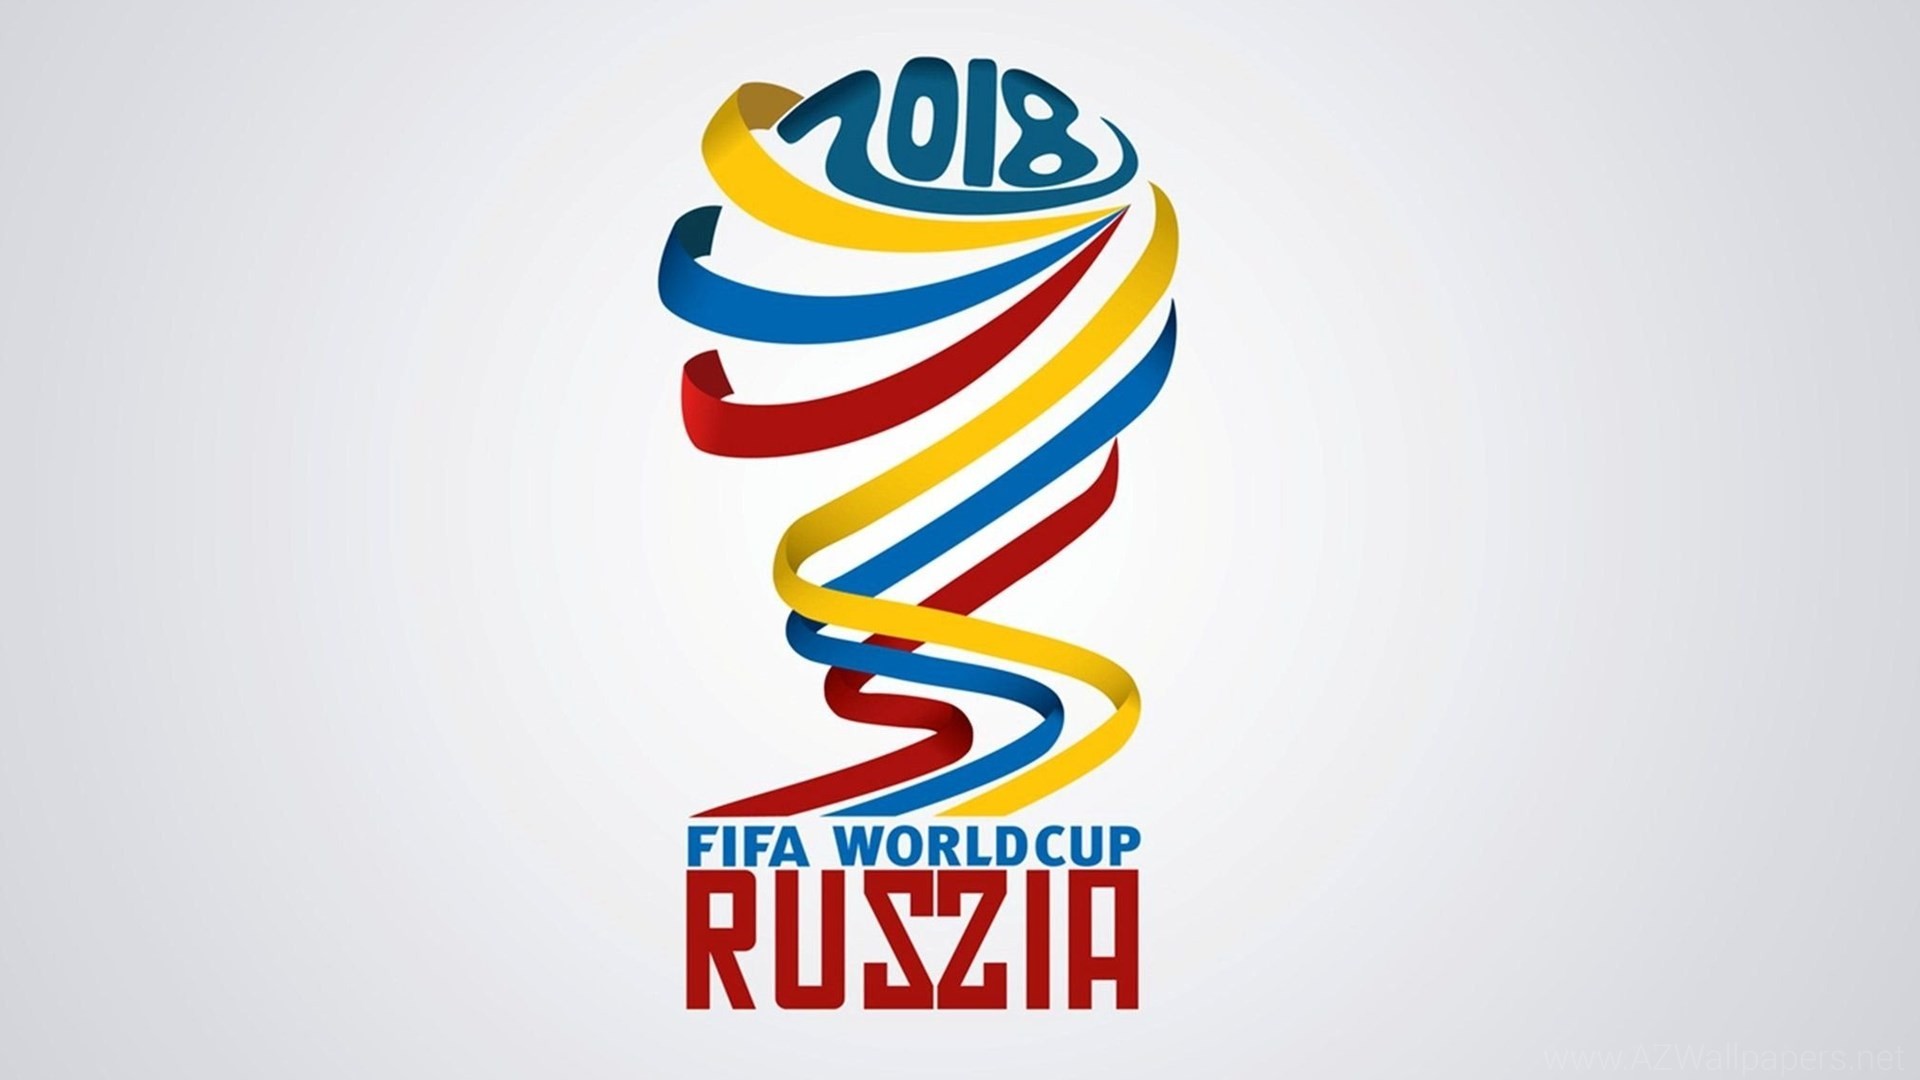 2018 World Cup HD Wallpaper 1920x1080